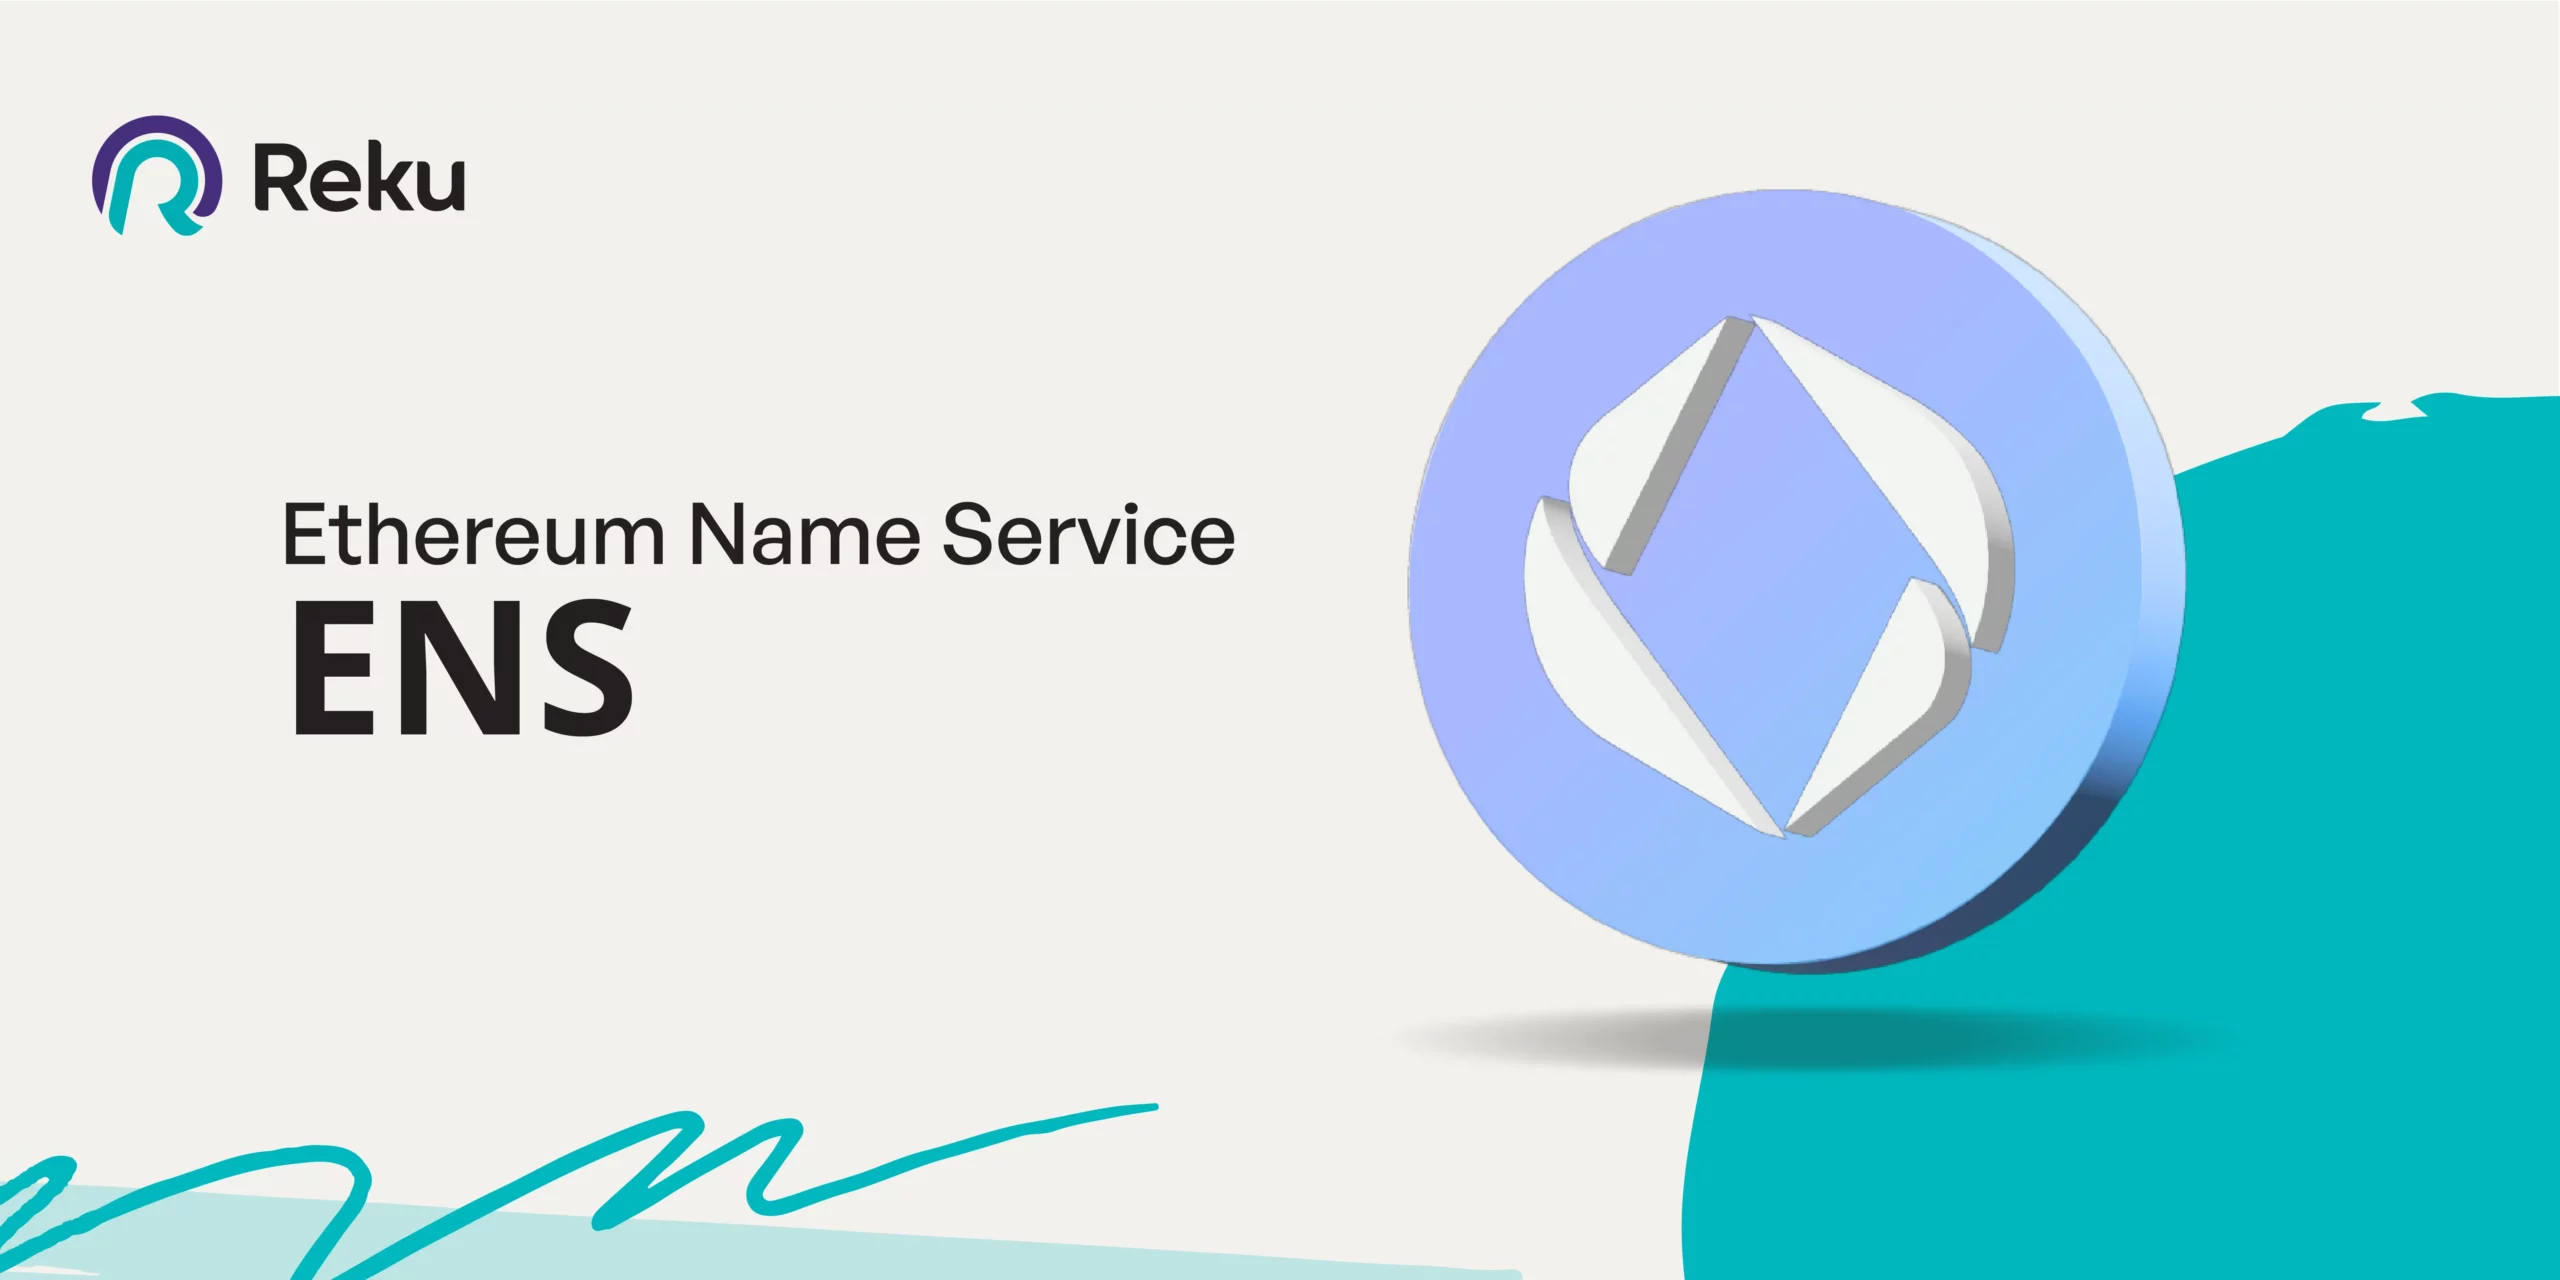 Apa itu Ethereum Name Service?